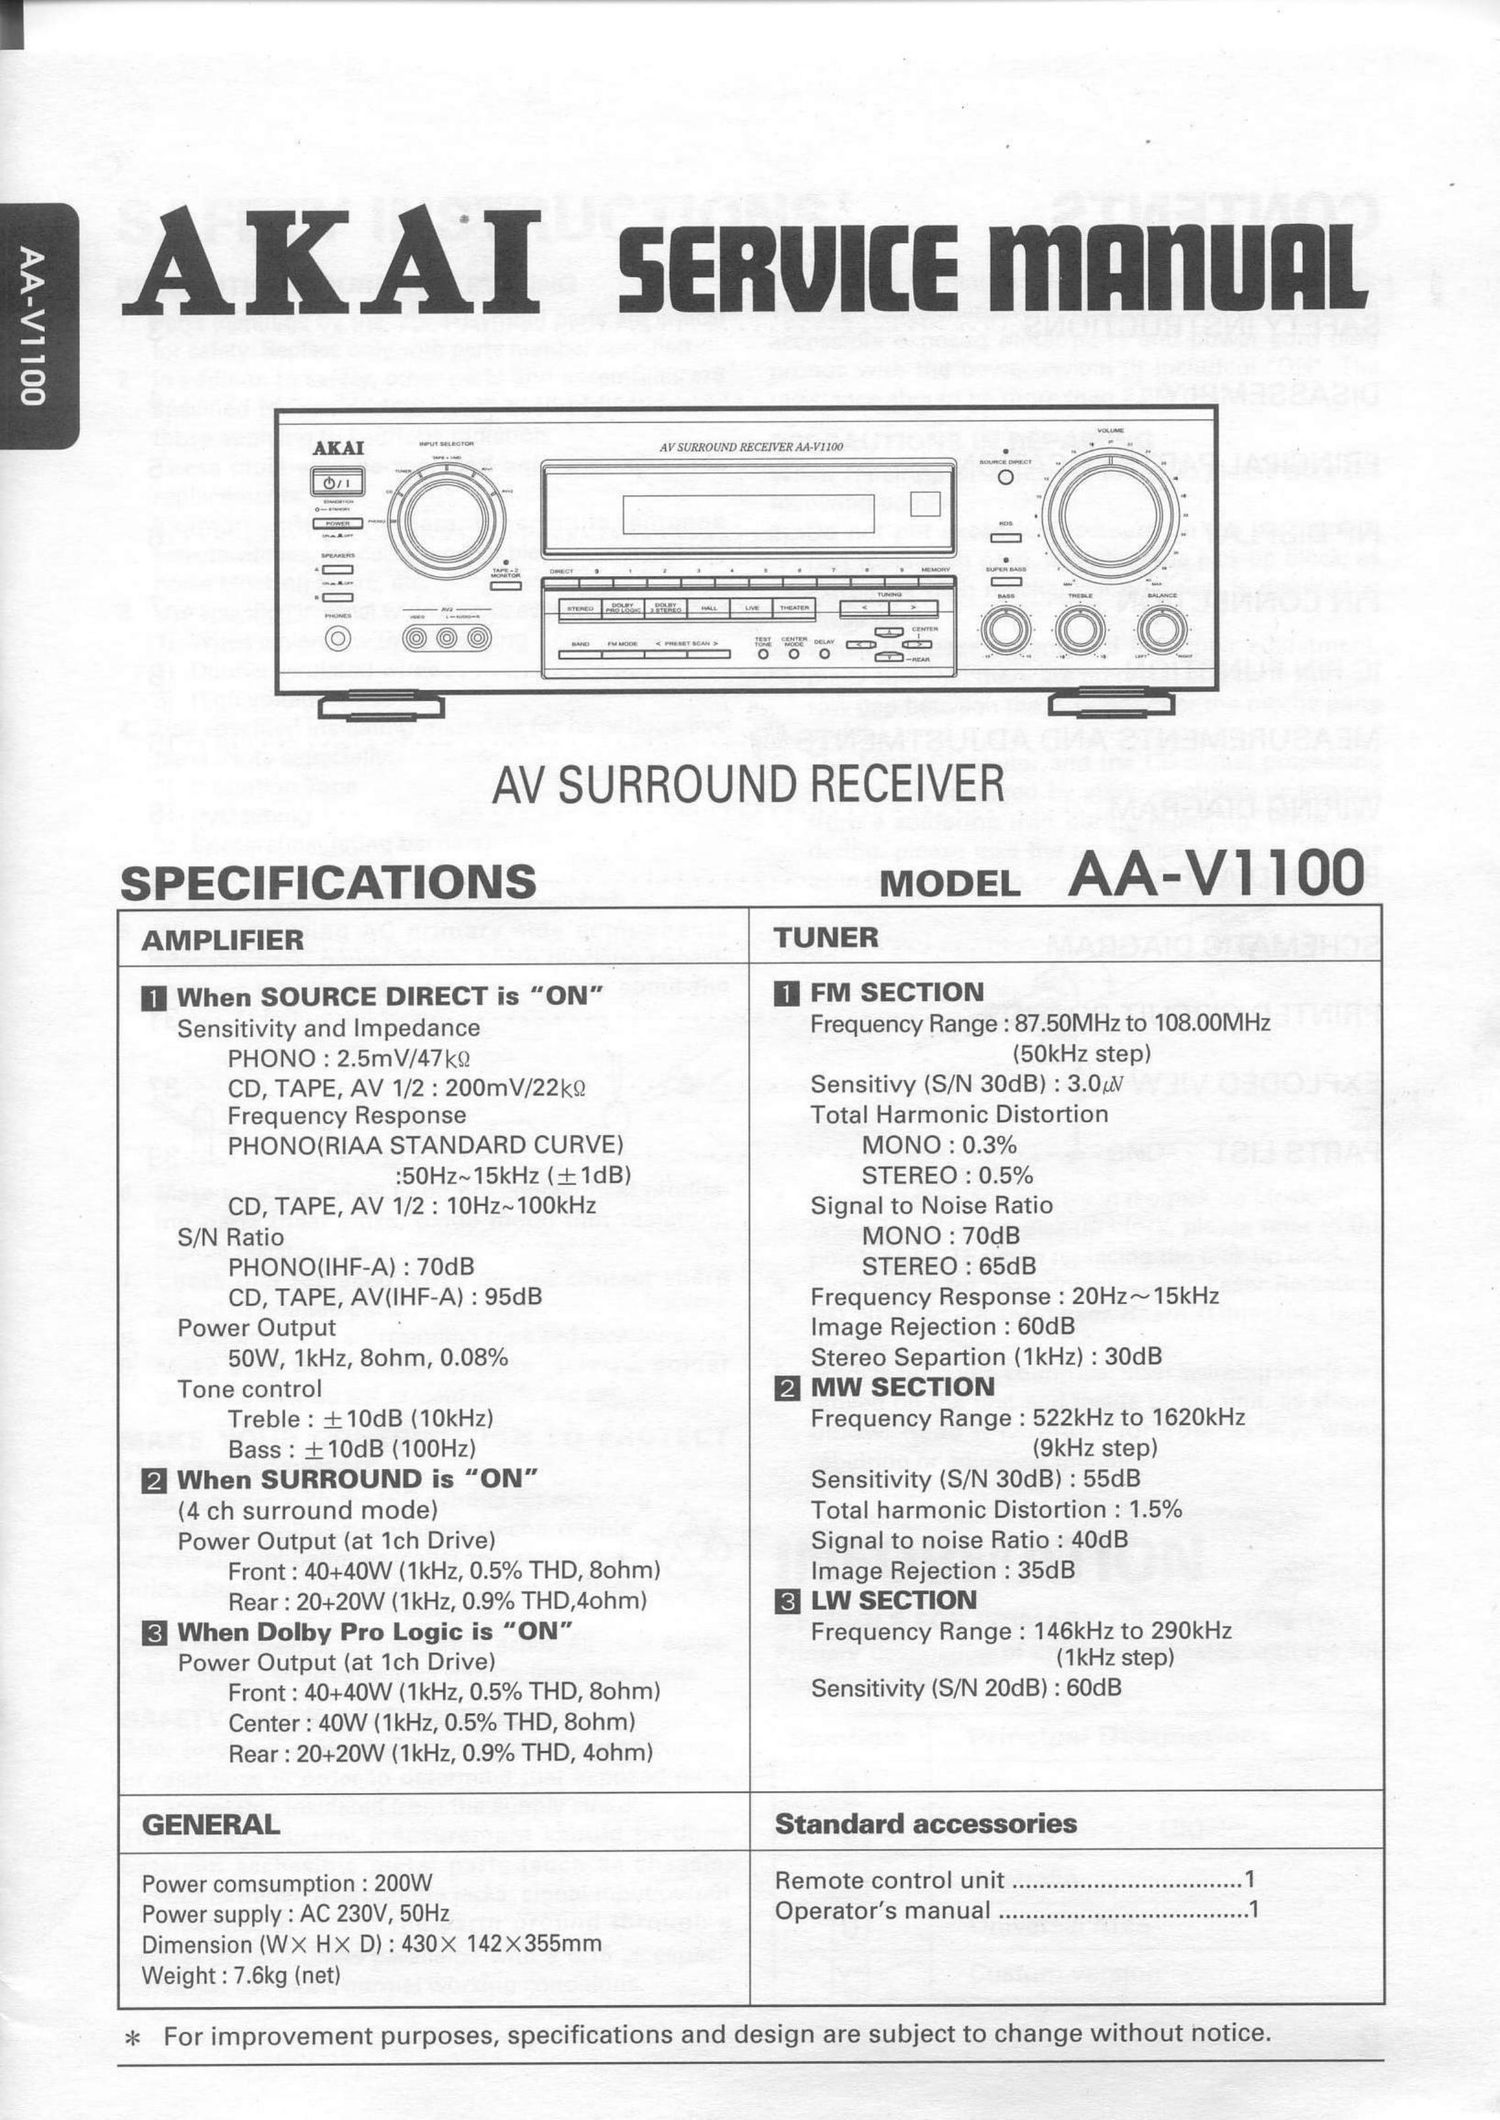 Akai AAV 1100 Service Manual